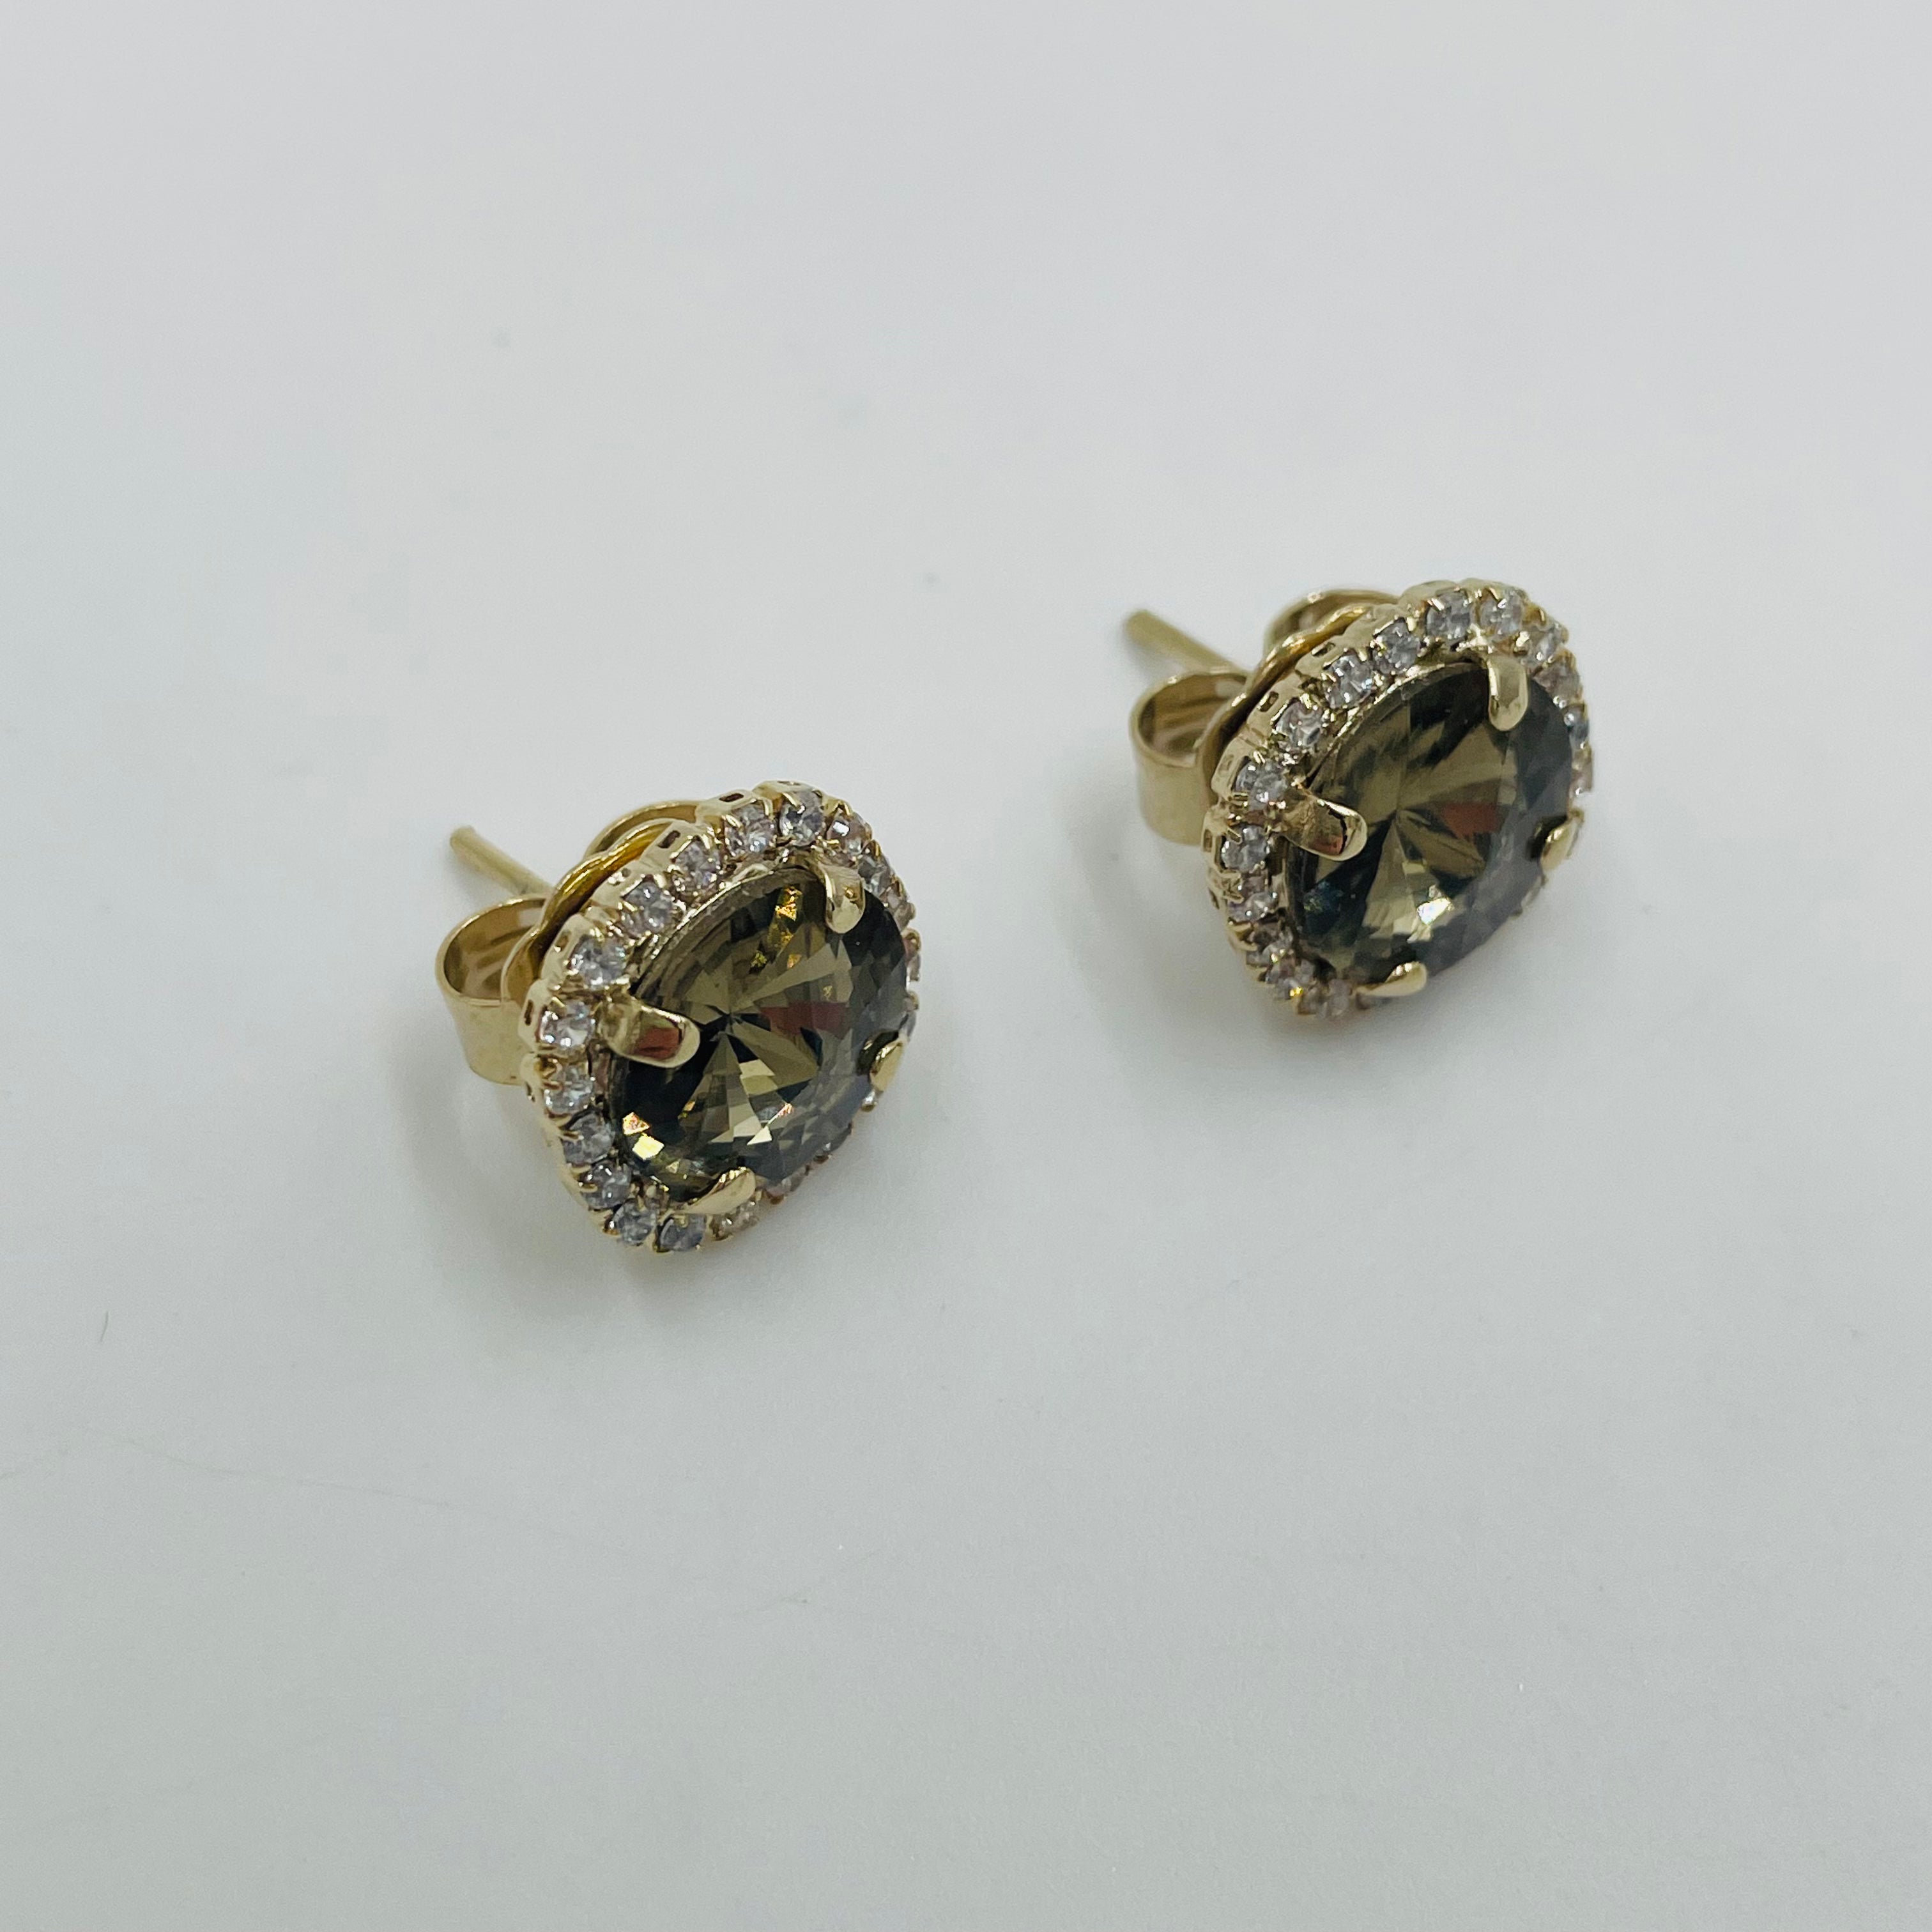 Swarovski Crystal stud earrings